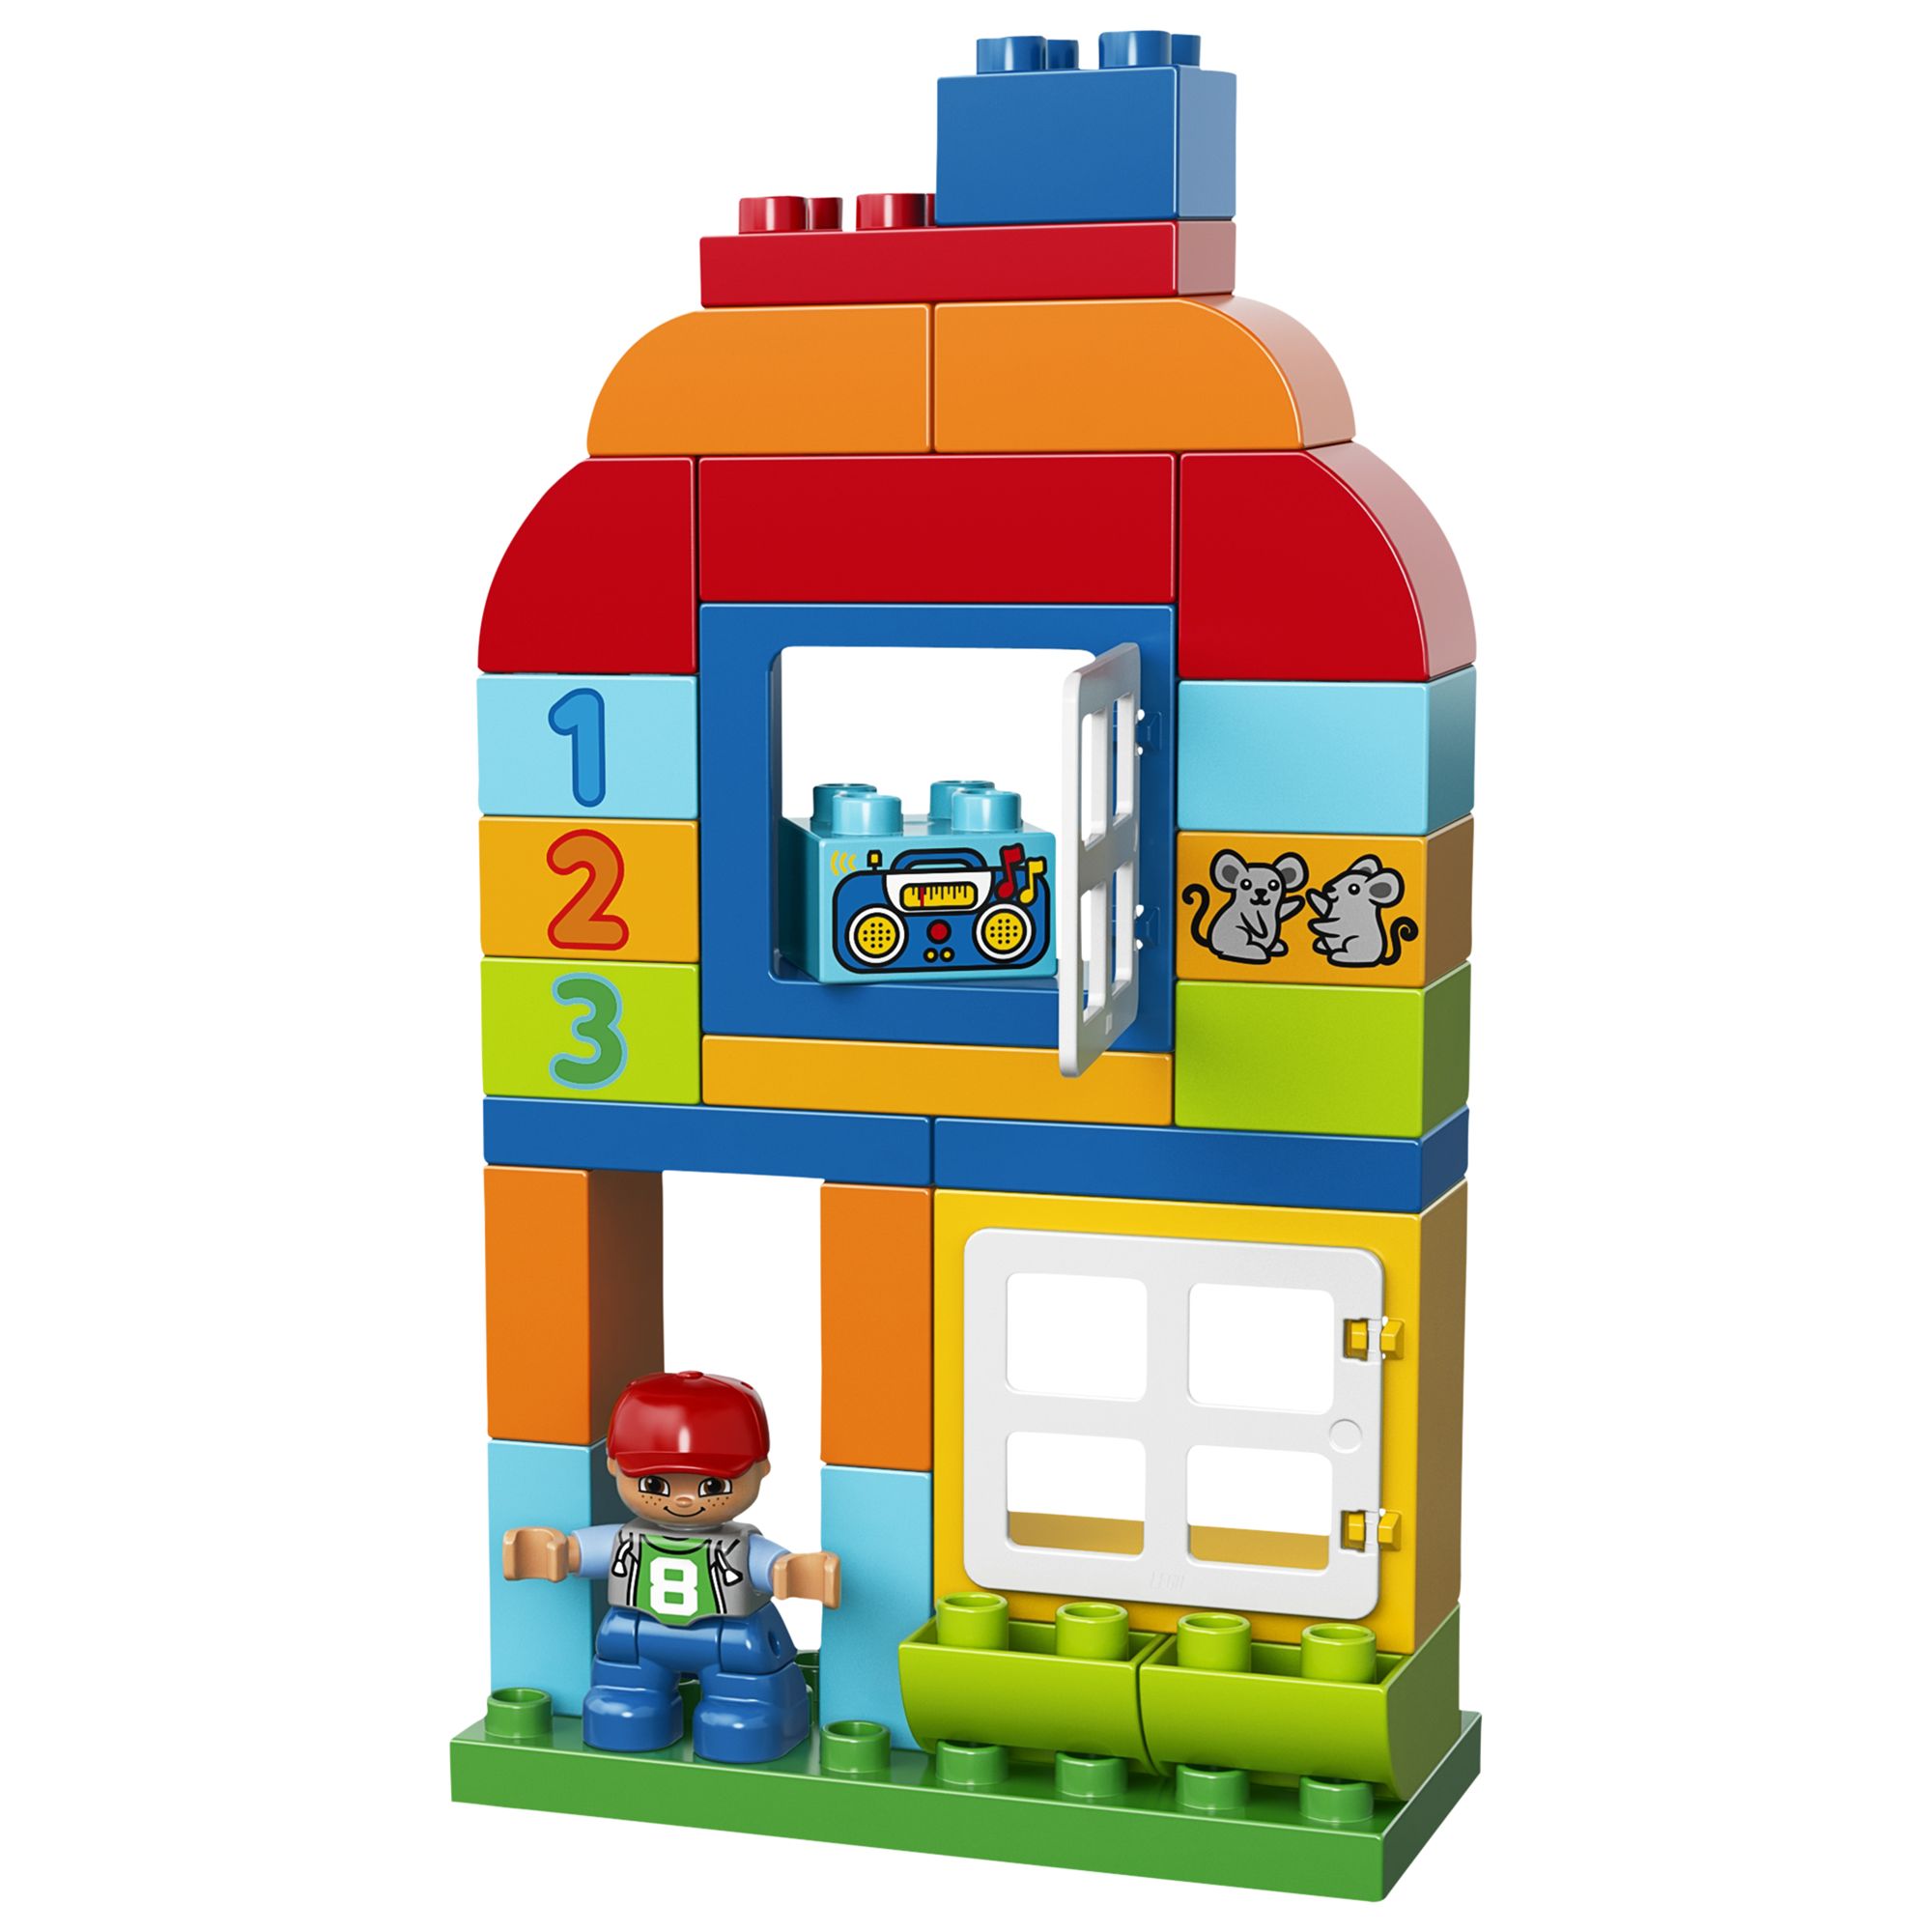 LEGO DUPLO 10572 Box of Fun at John Lewis & Partners